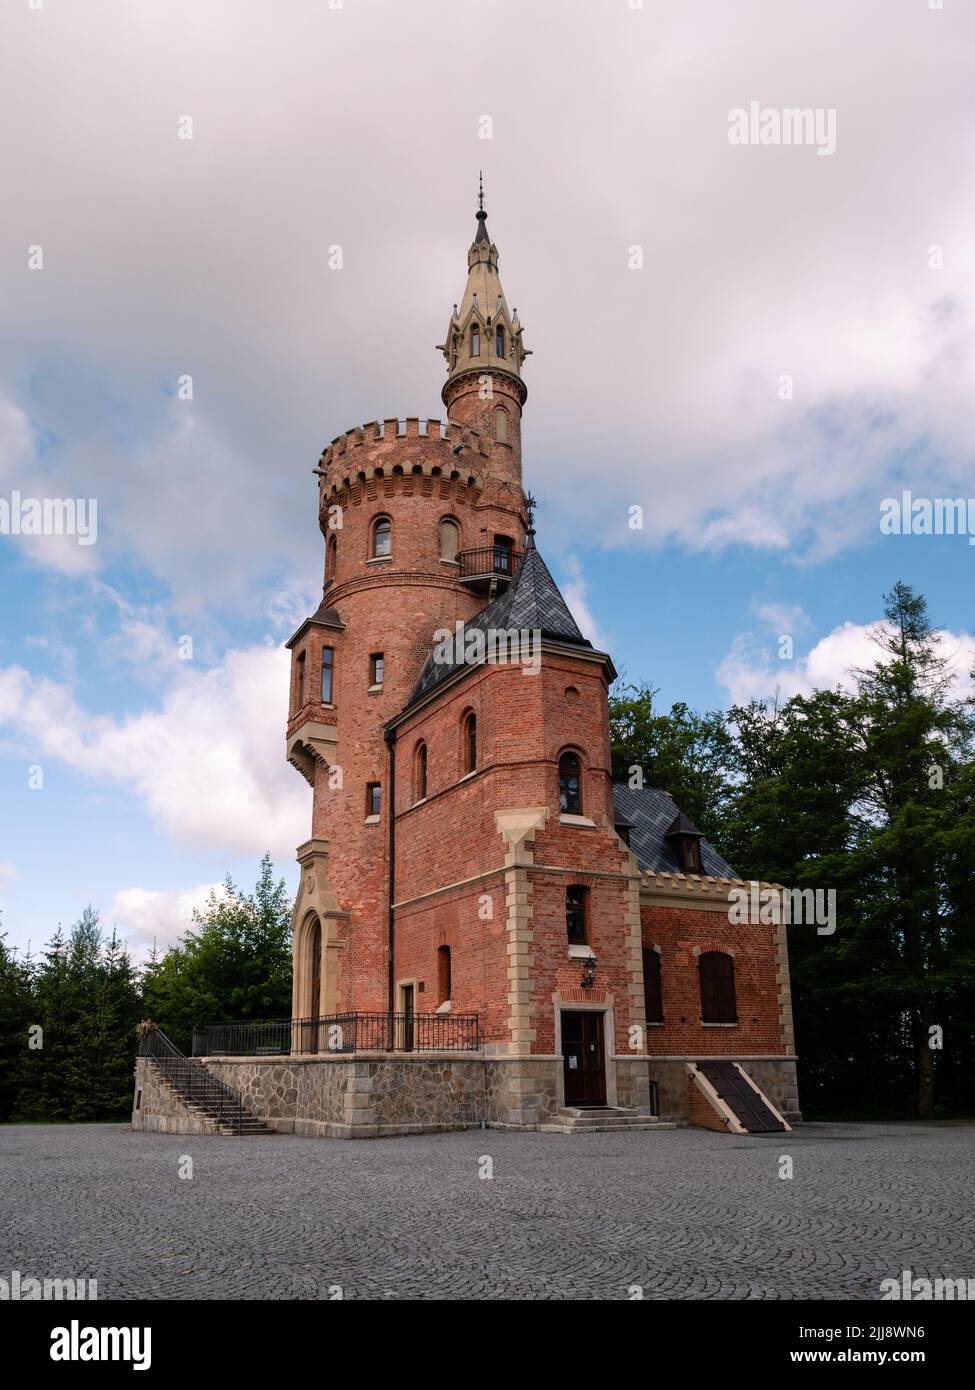 Goethe's Lookout Tower or Goethova vyhlídka in Karlovy Vary, Bohemia, Czech Republic Stock Photo